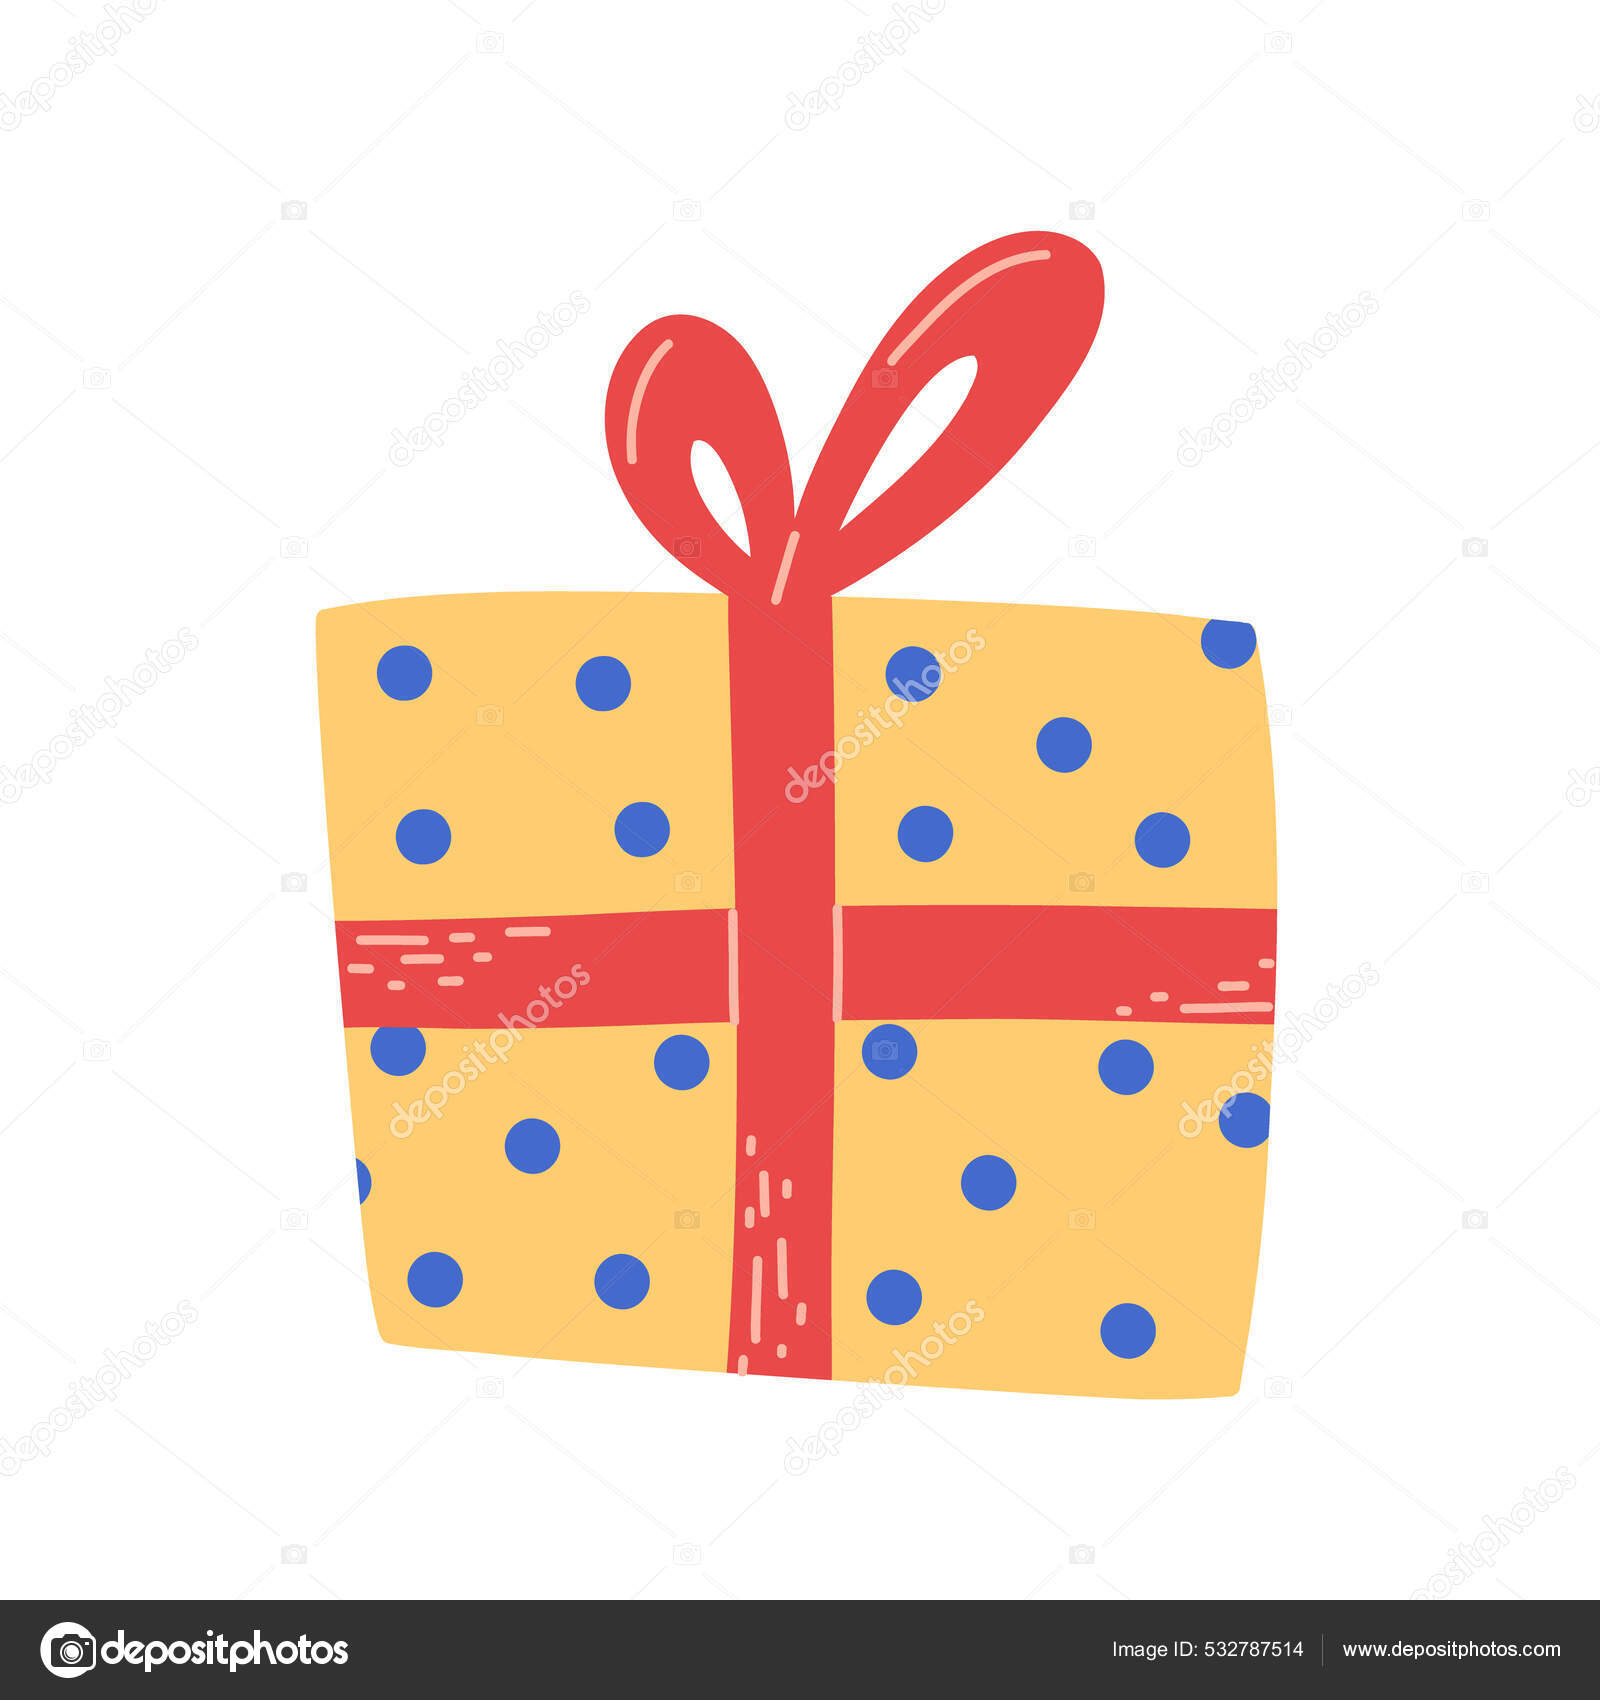 https://st.depositphotos.com/50031892/53278/v/1600/depositphotos_532787514-stock-illustration-hand-drawn-gift-box-bow.jpg